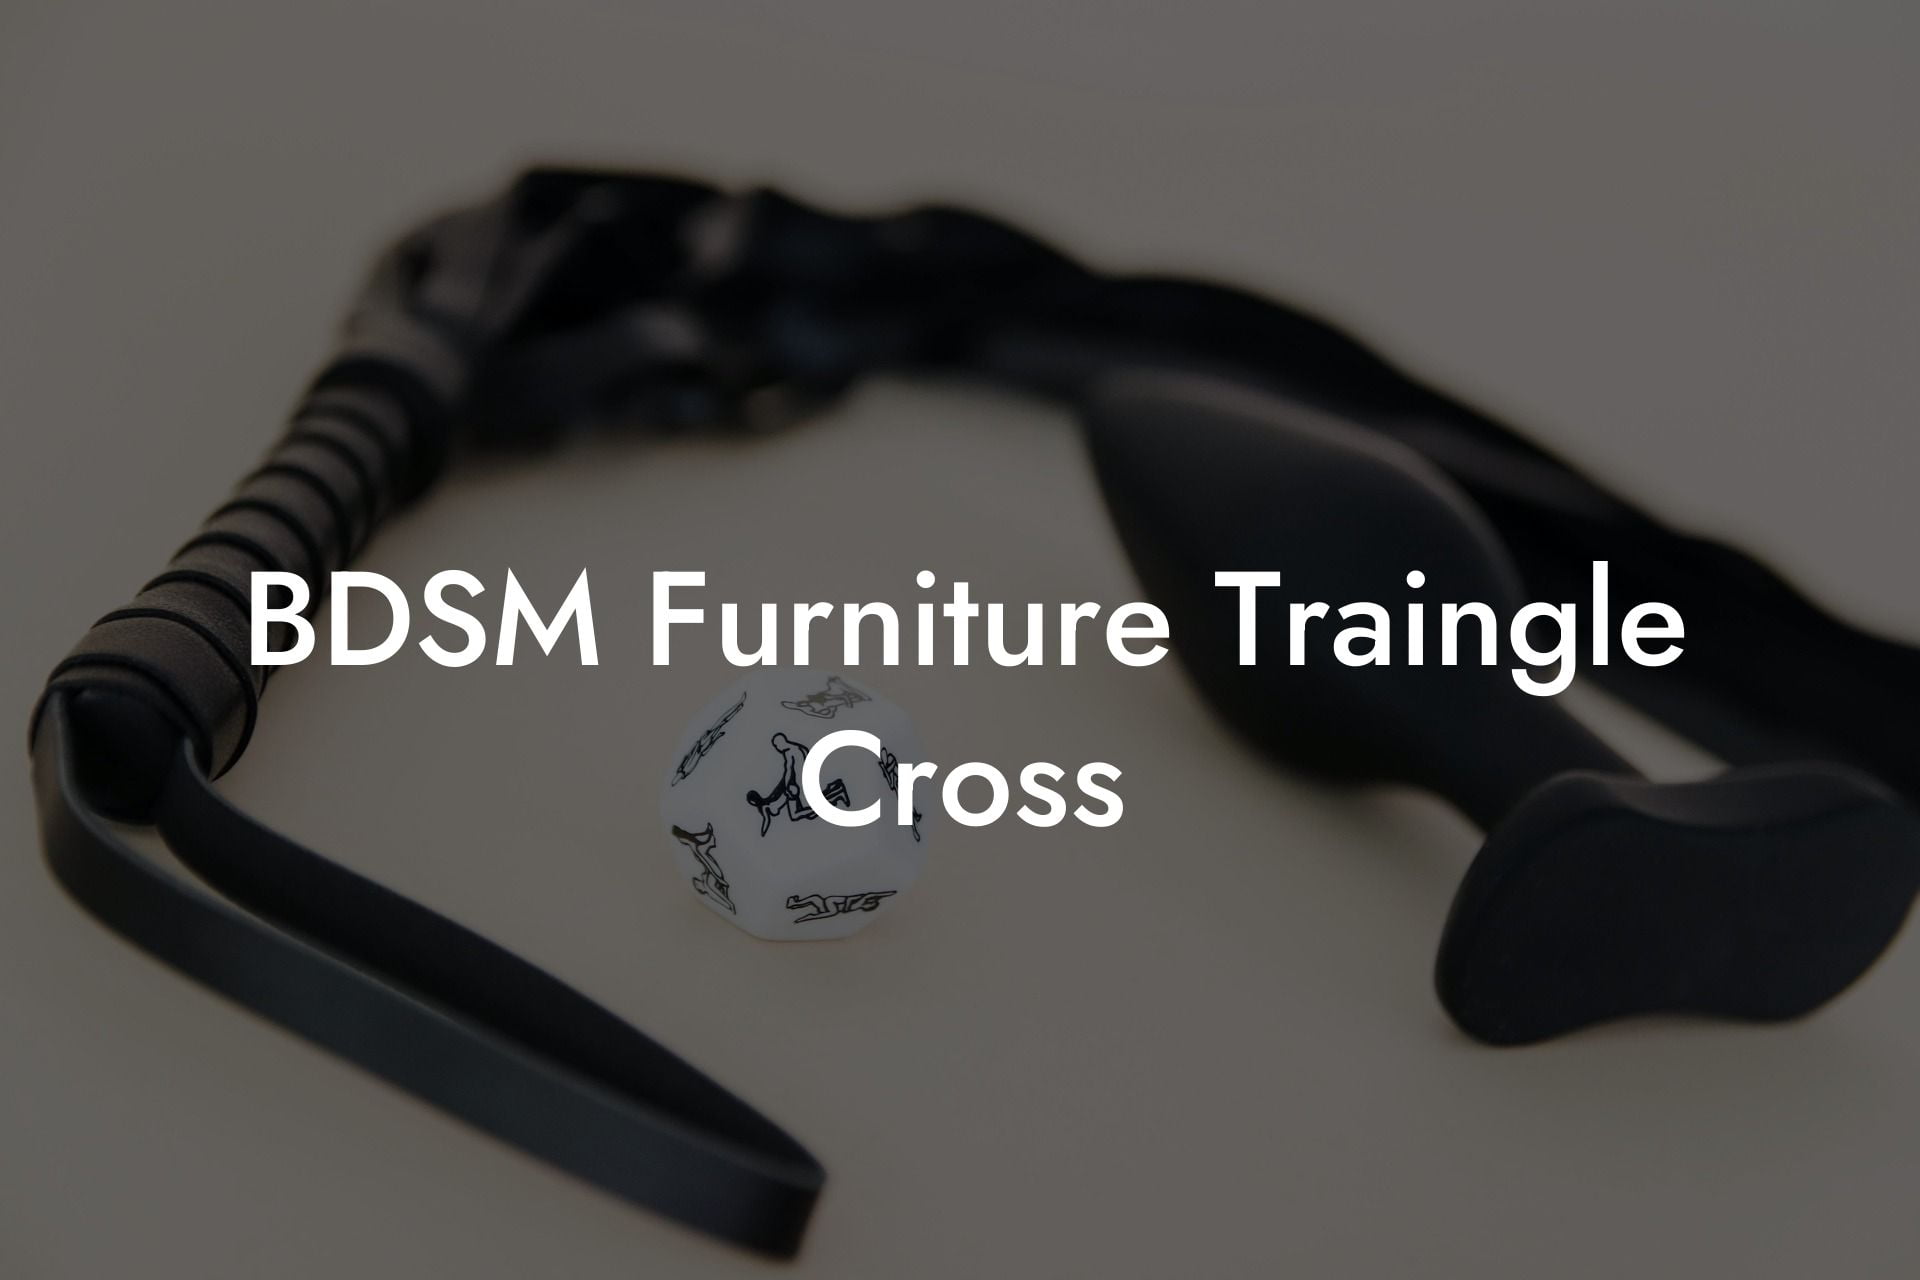 BDSM Furniture Traingle Cross